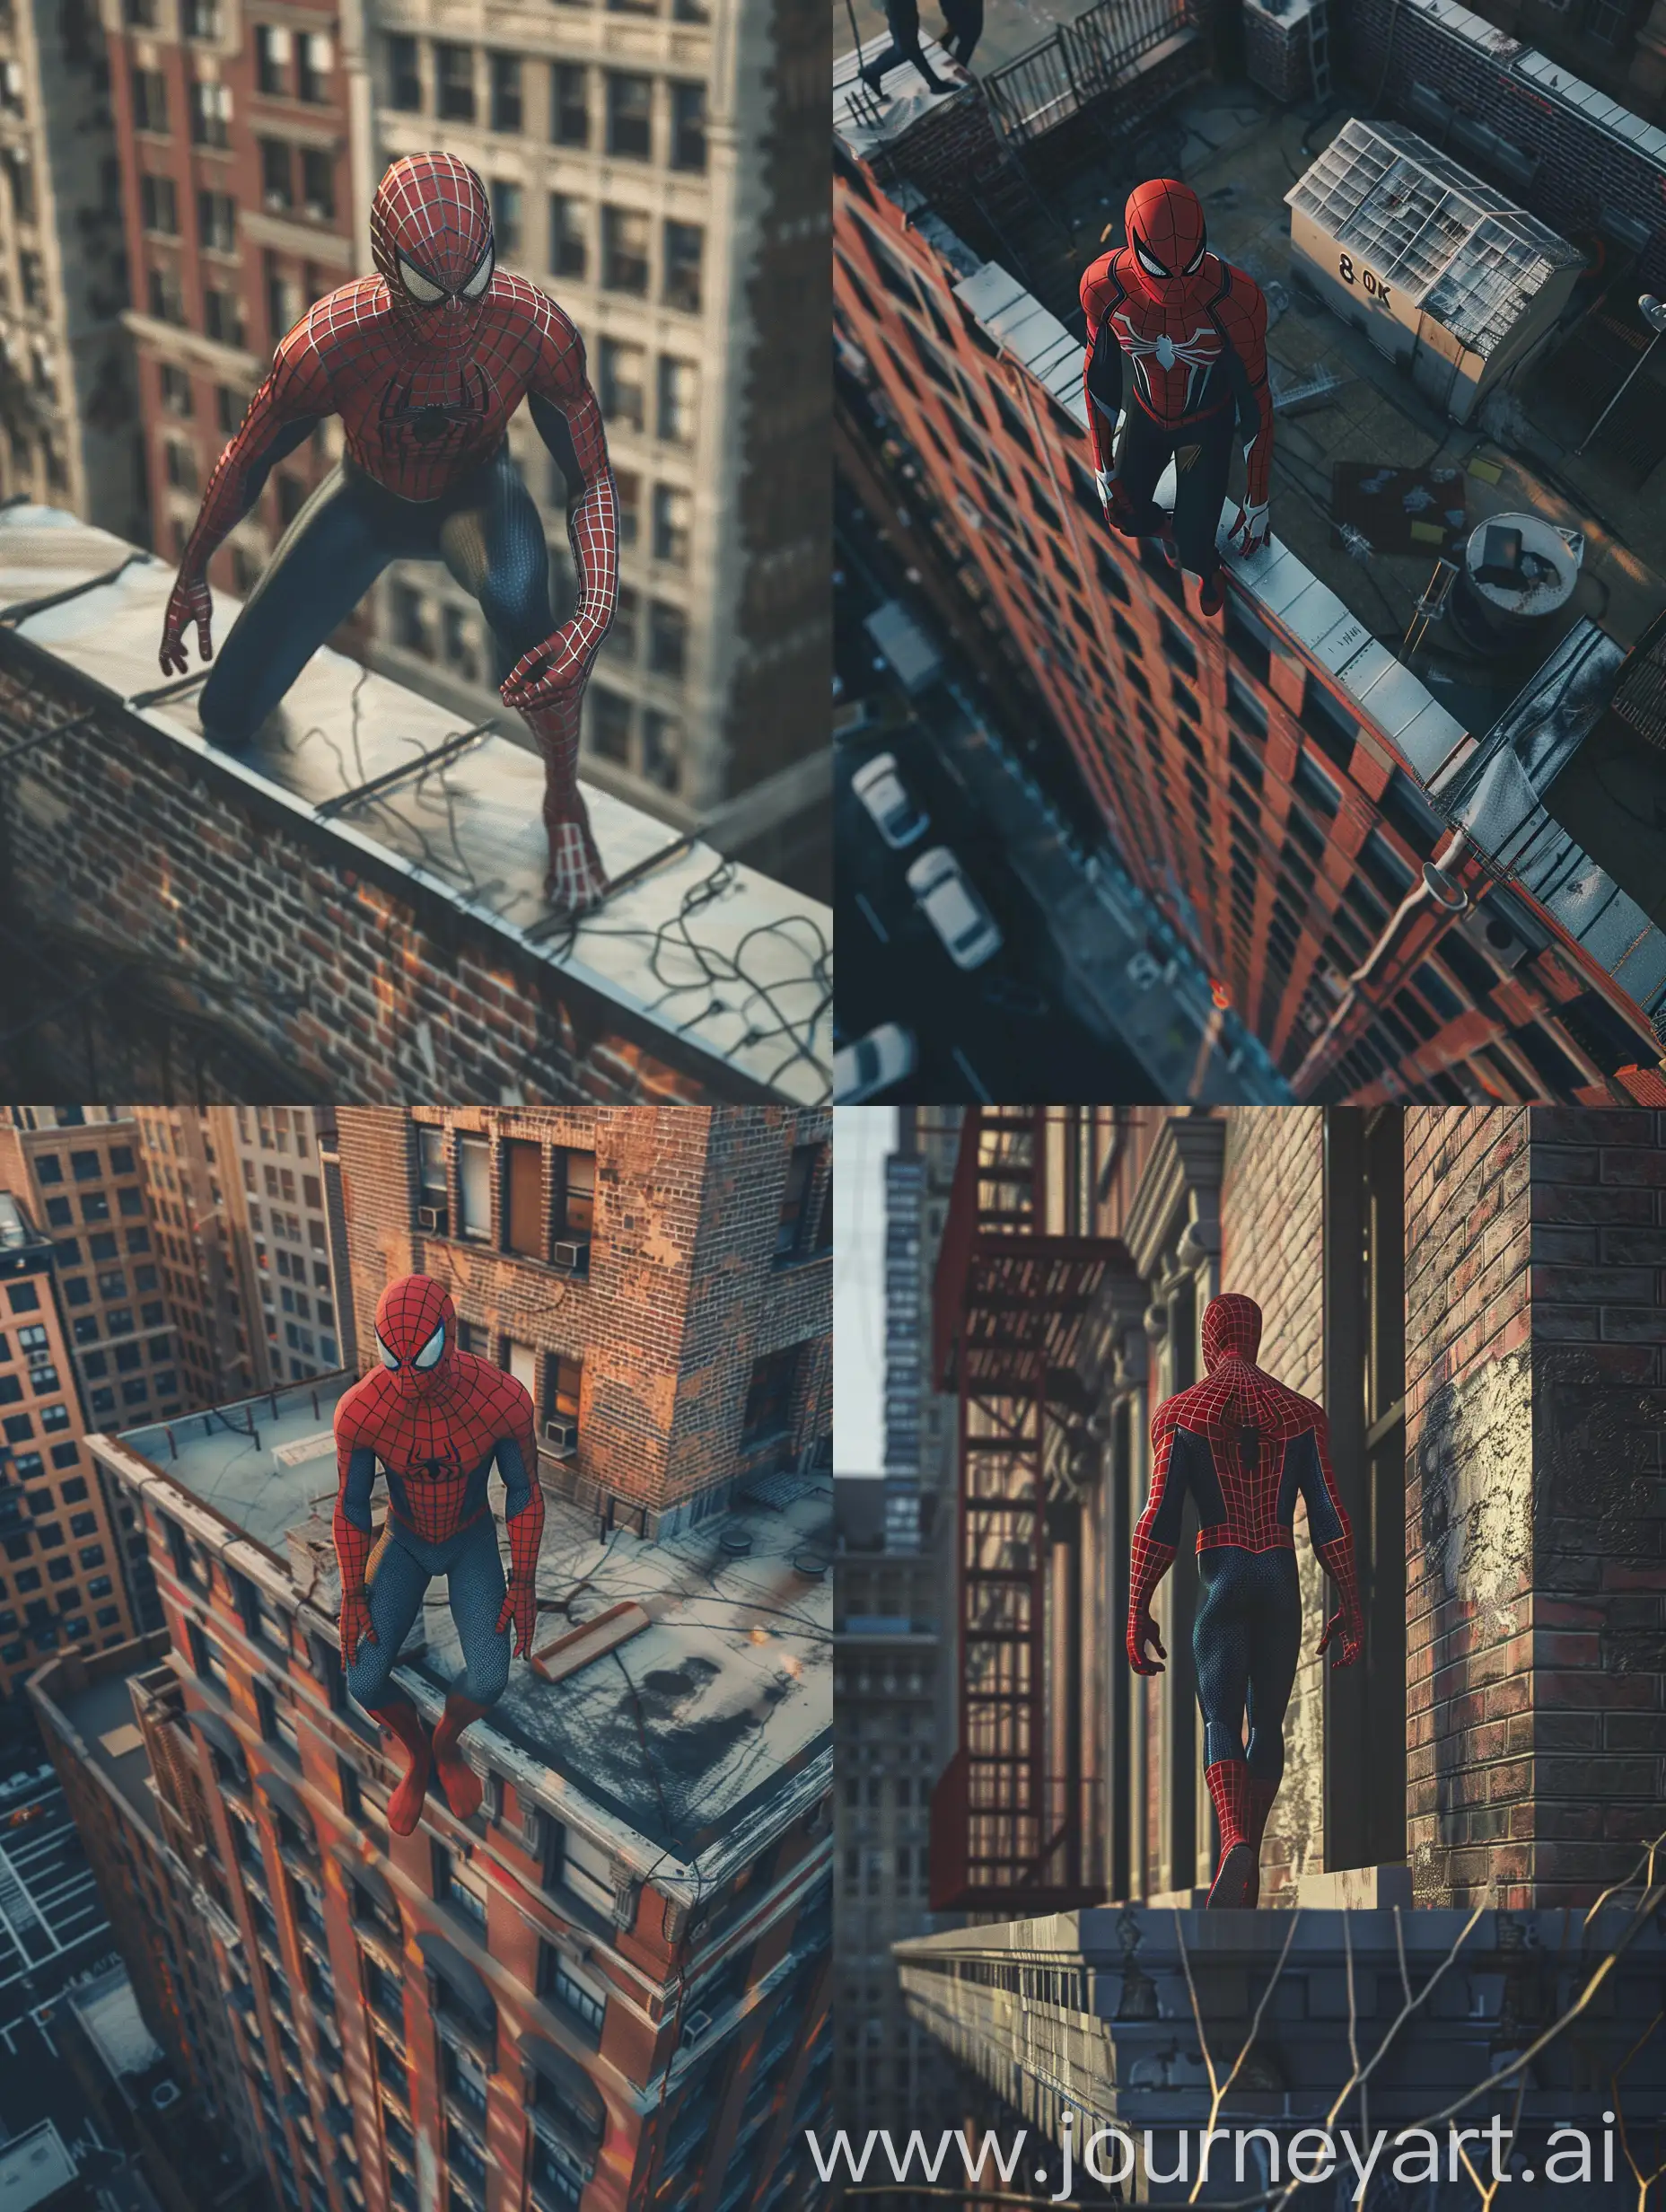 SpiderMan-Walking-on-a-New-York-City-Skyscraper-Ultra-Realistic-Poster-Art